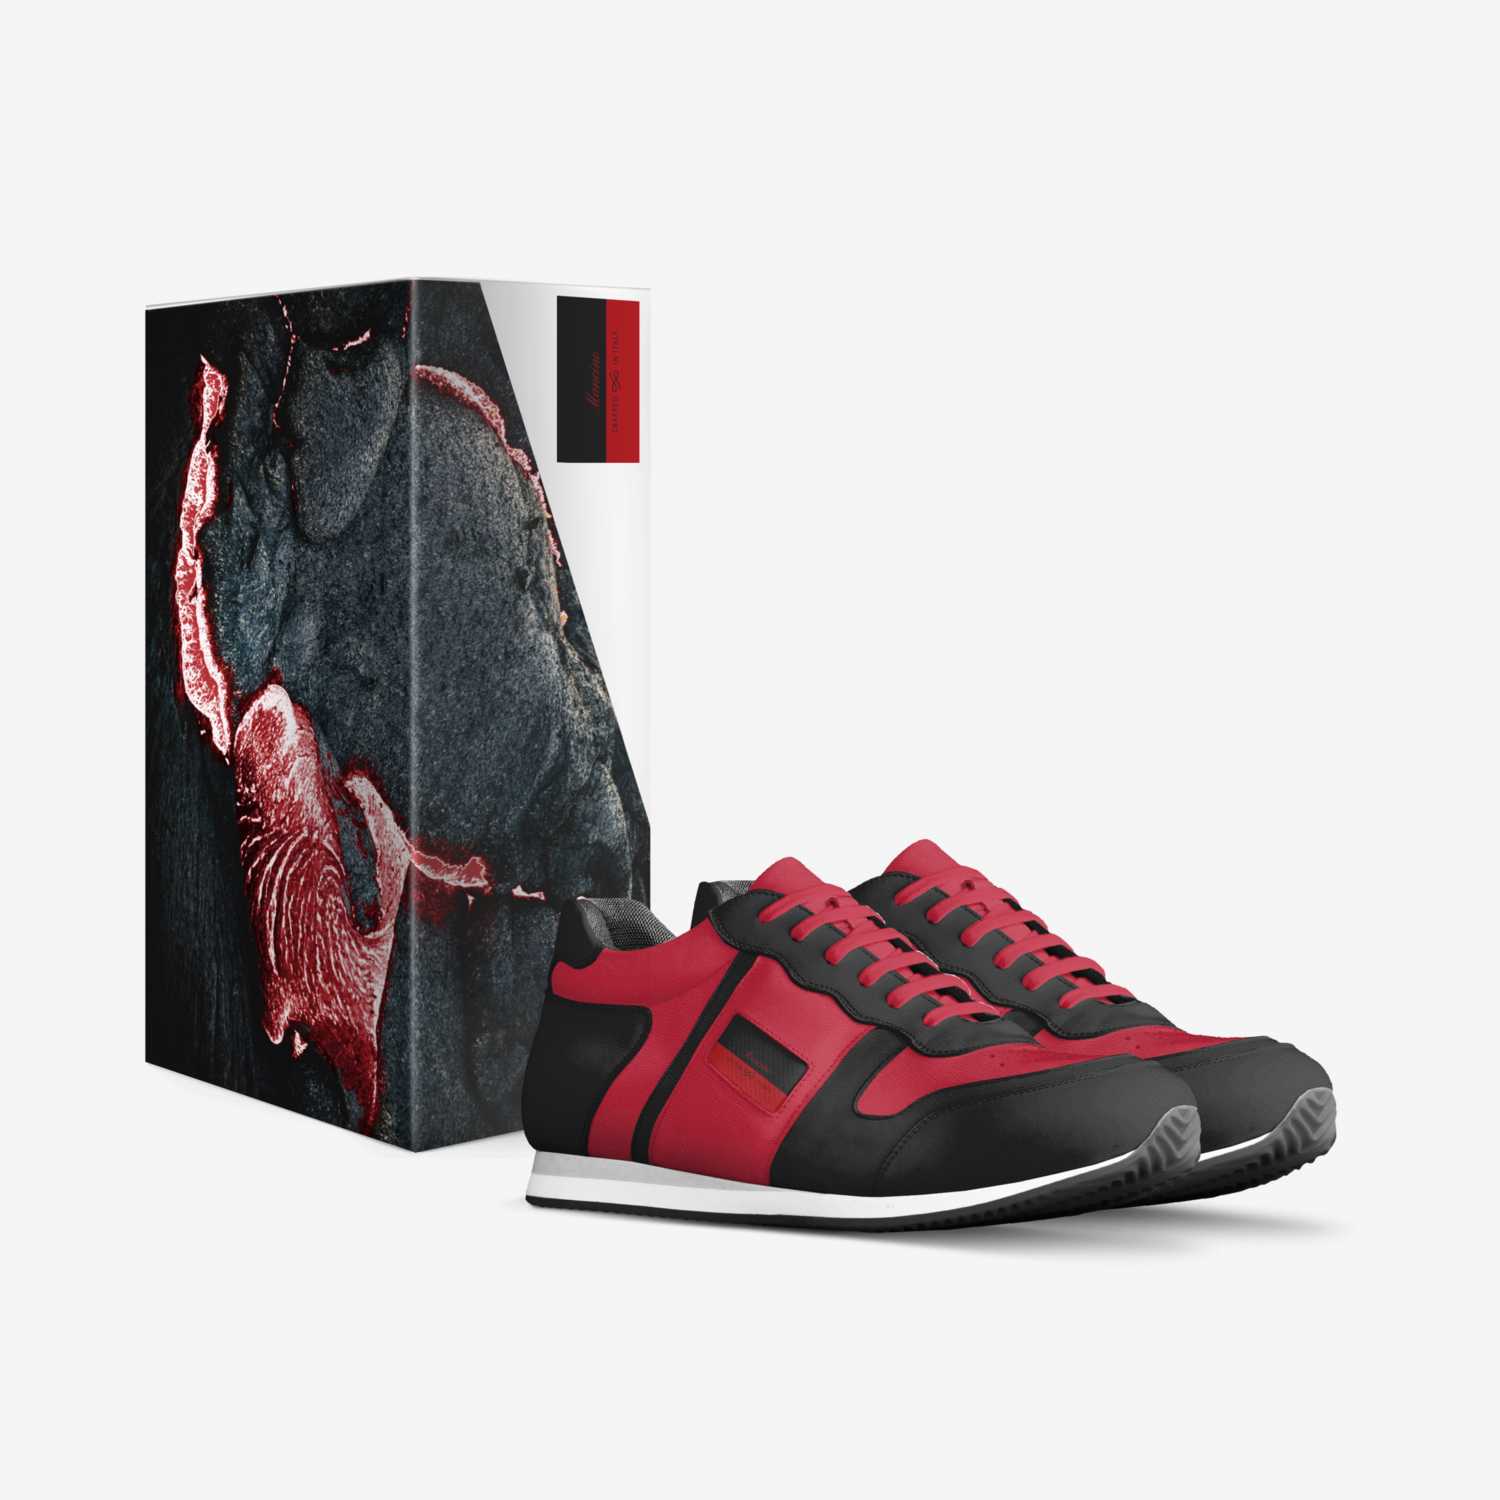 Mancino Vulcano B custom made in Italy shoes by Ray "lefty" Rhodes | Box view